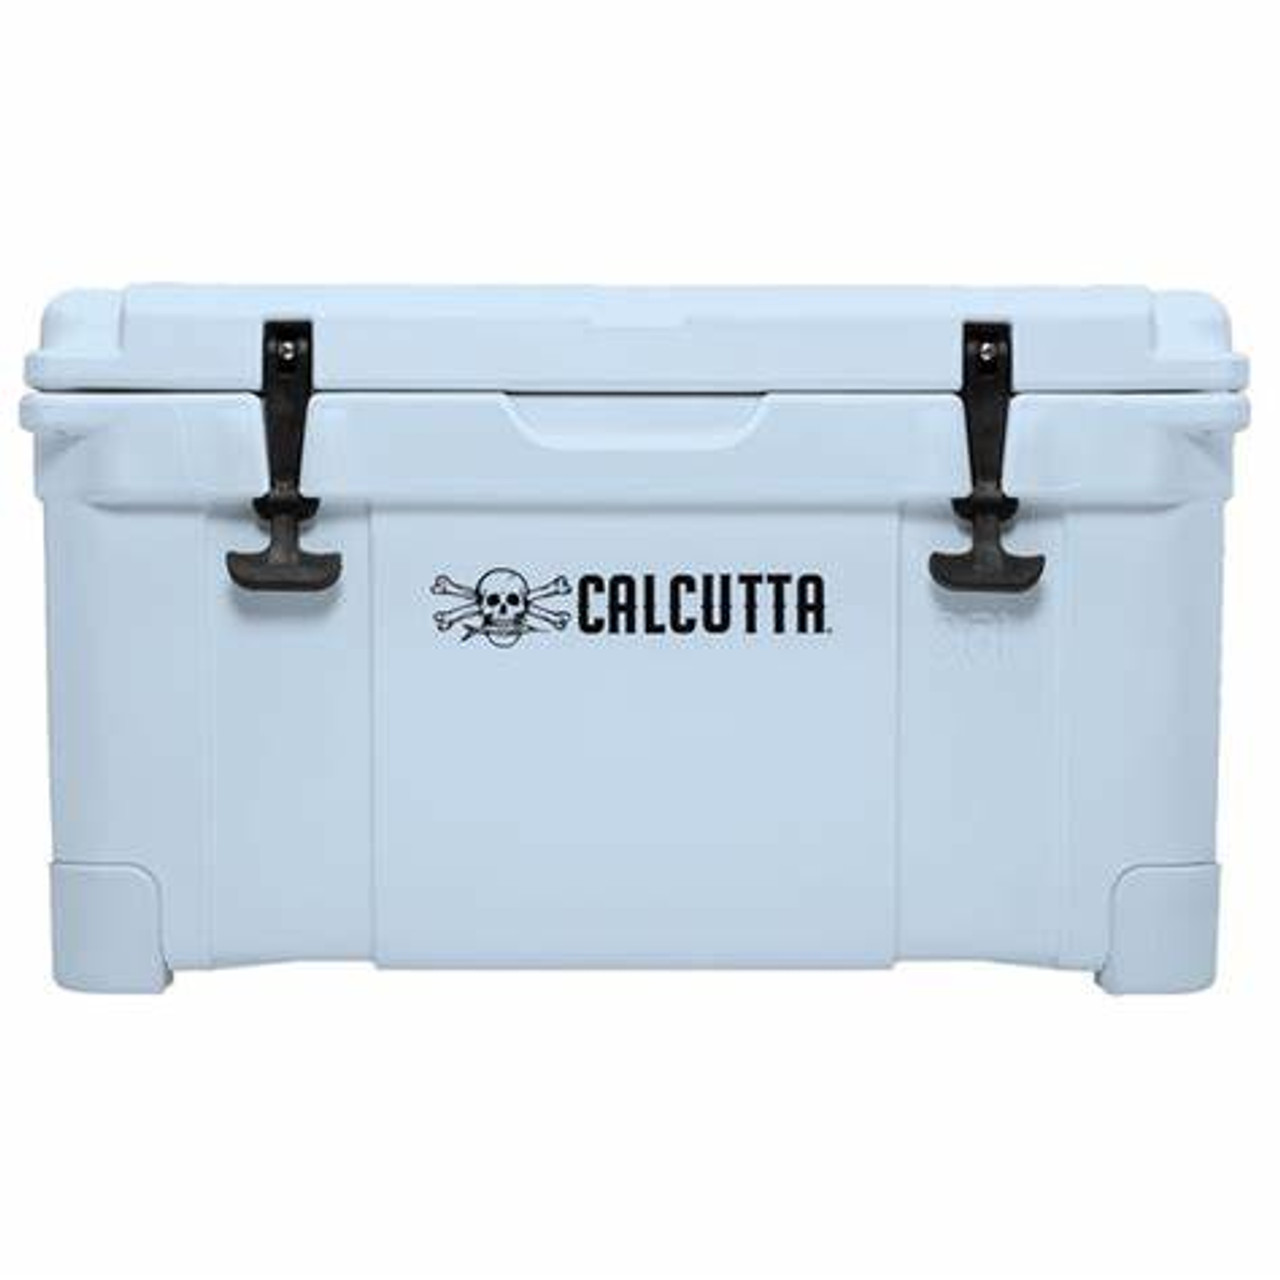 Calcutta Renegade Cooler 35 Liter Light Blue wremoveable Tray & LED Drain Plug, EZ Lift Rope Handles, 26.4"Lx15.8"Wx15.4"H